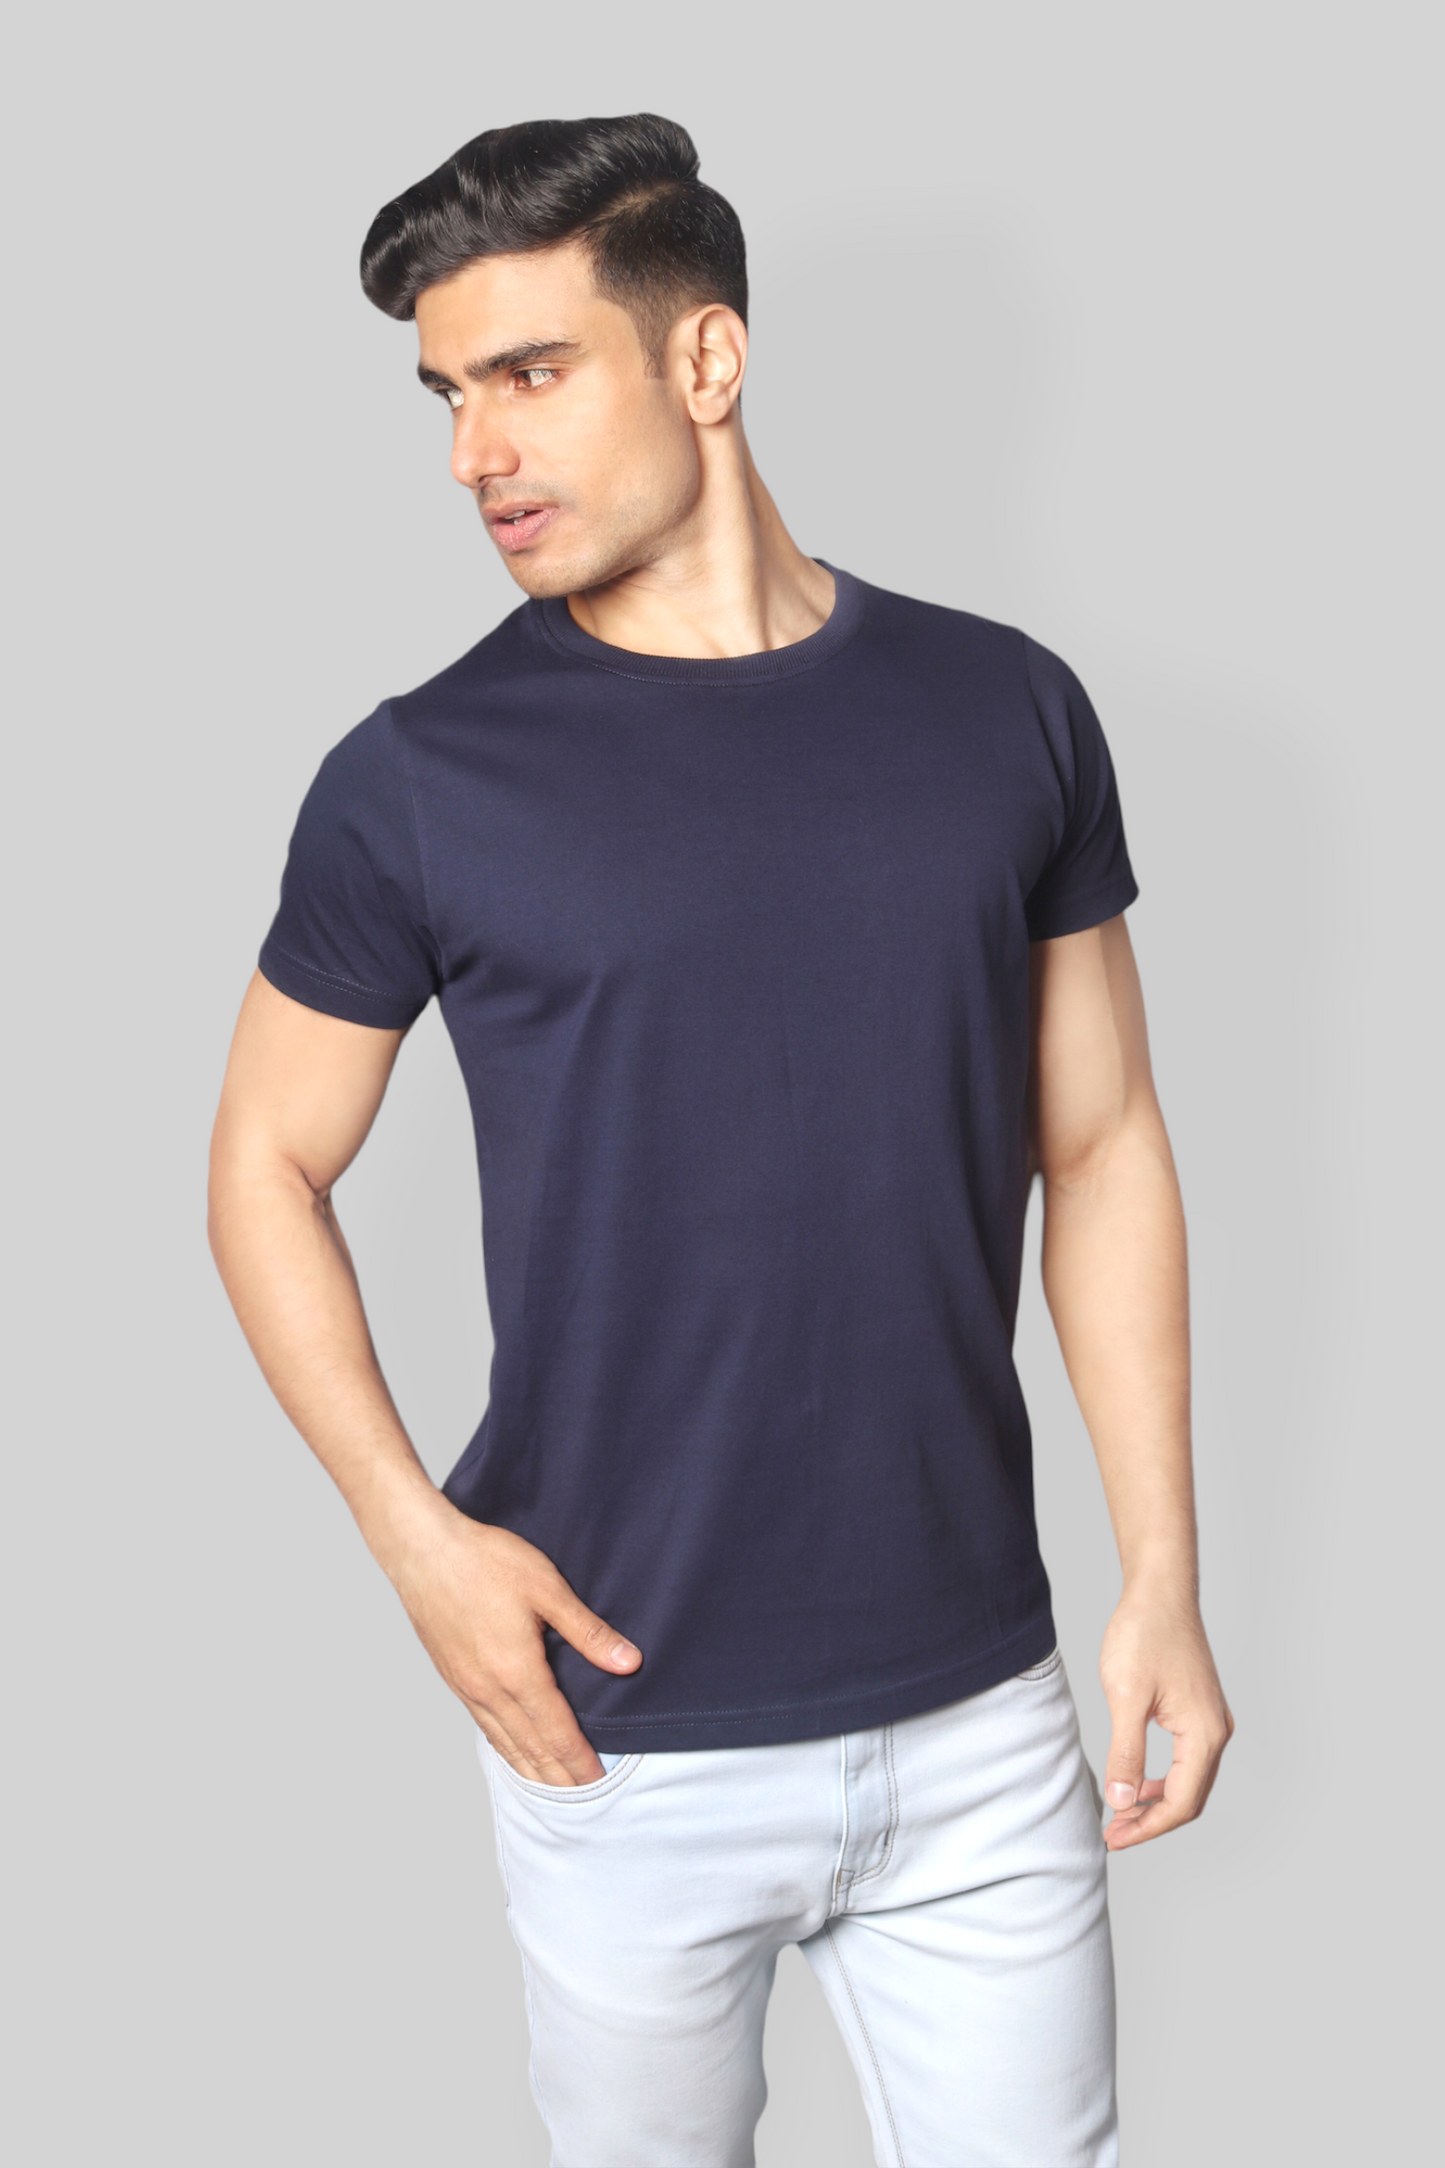 Solid Airforce Blue plain Round Neck Cotton Tshirt for men